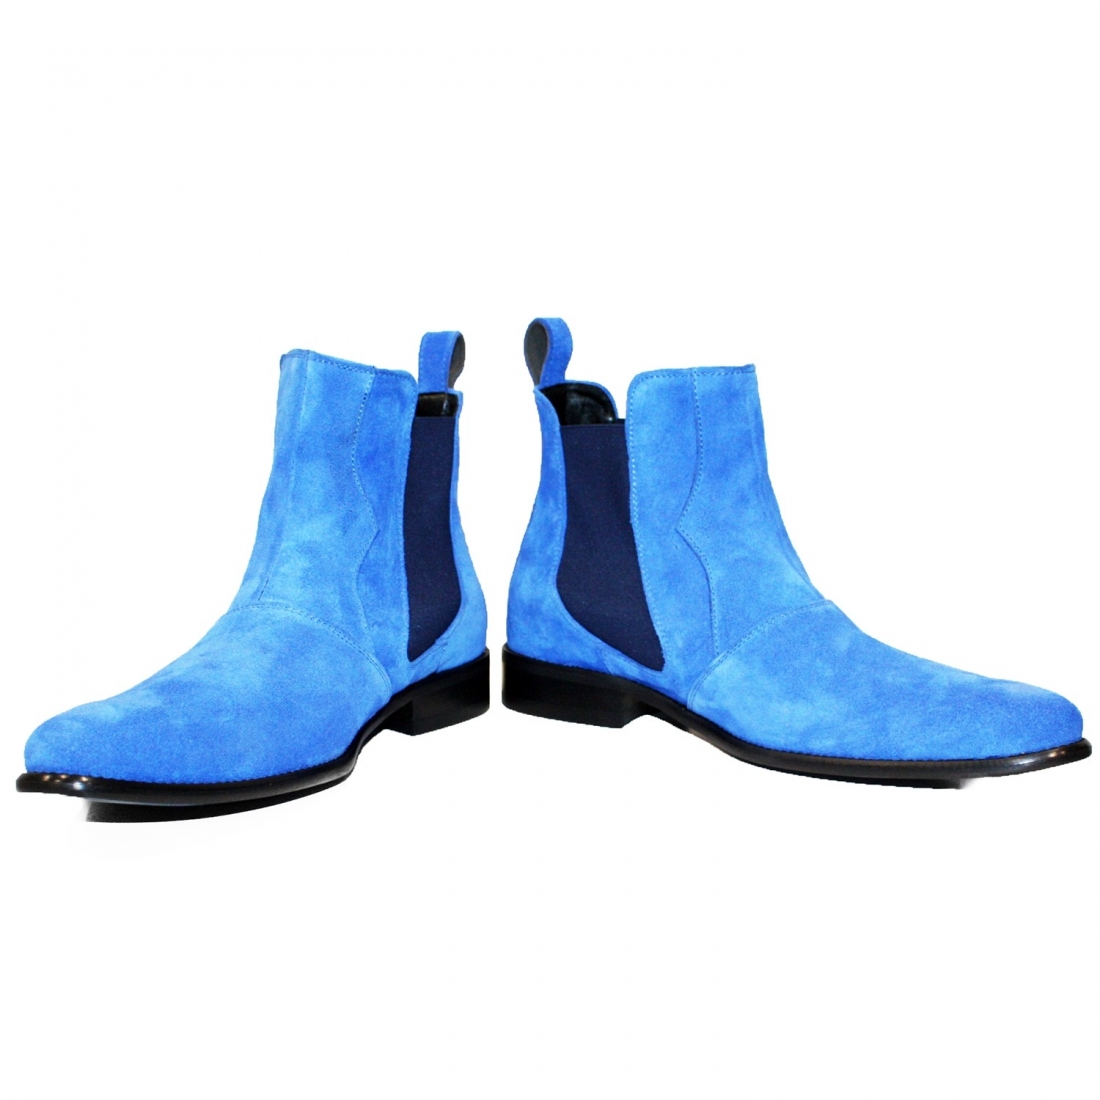 Modello Bluemoon - Bottines Chelsea - Handmade Colorful Italian Leather Shoes